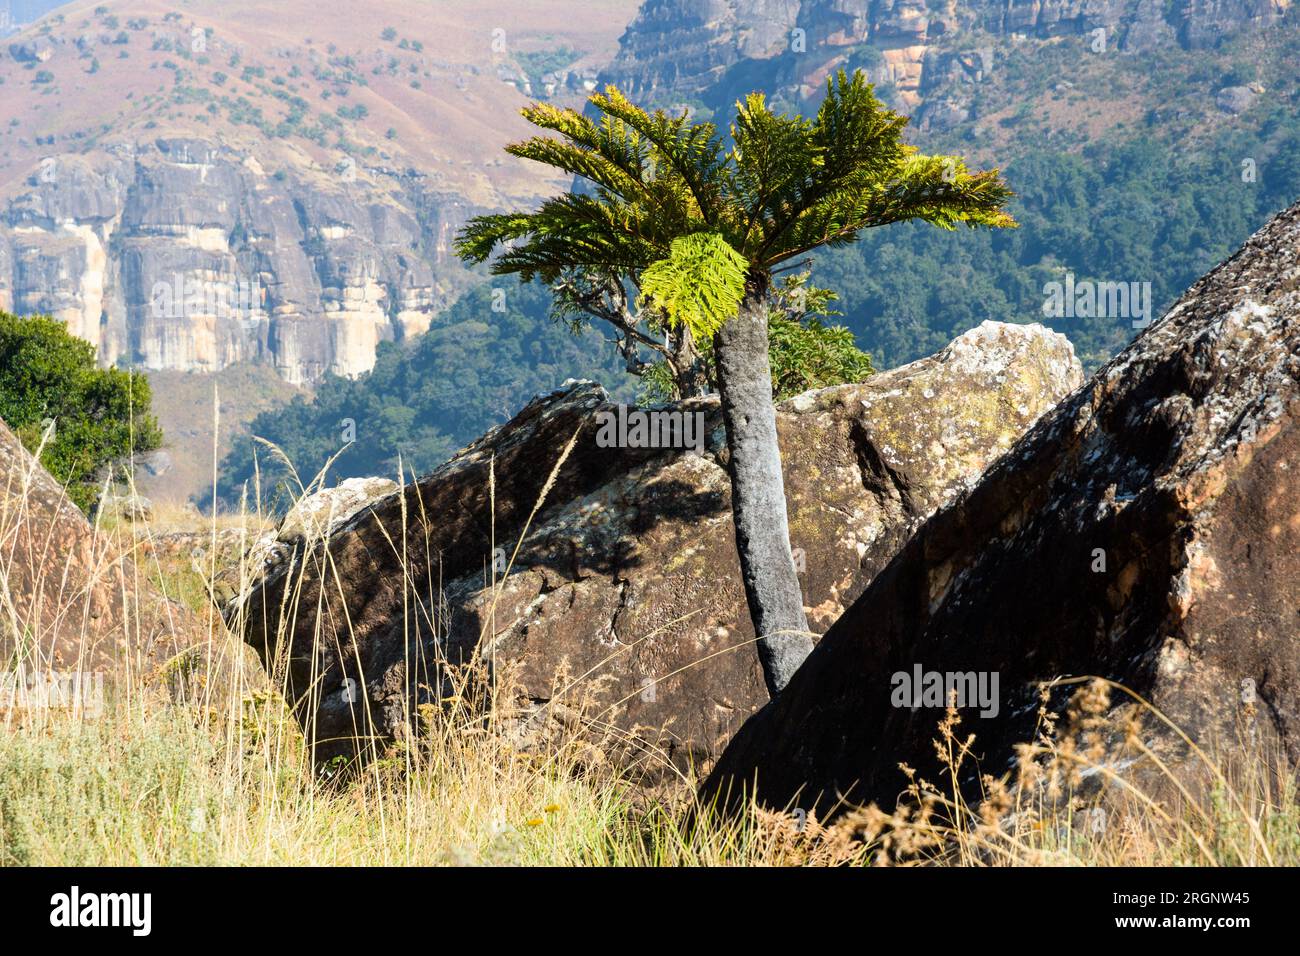 Ein Cycad (Broodboom) in der Giants Castle Gegend in den Drakensberg Bergen in Südafrika Stockfoto